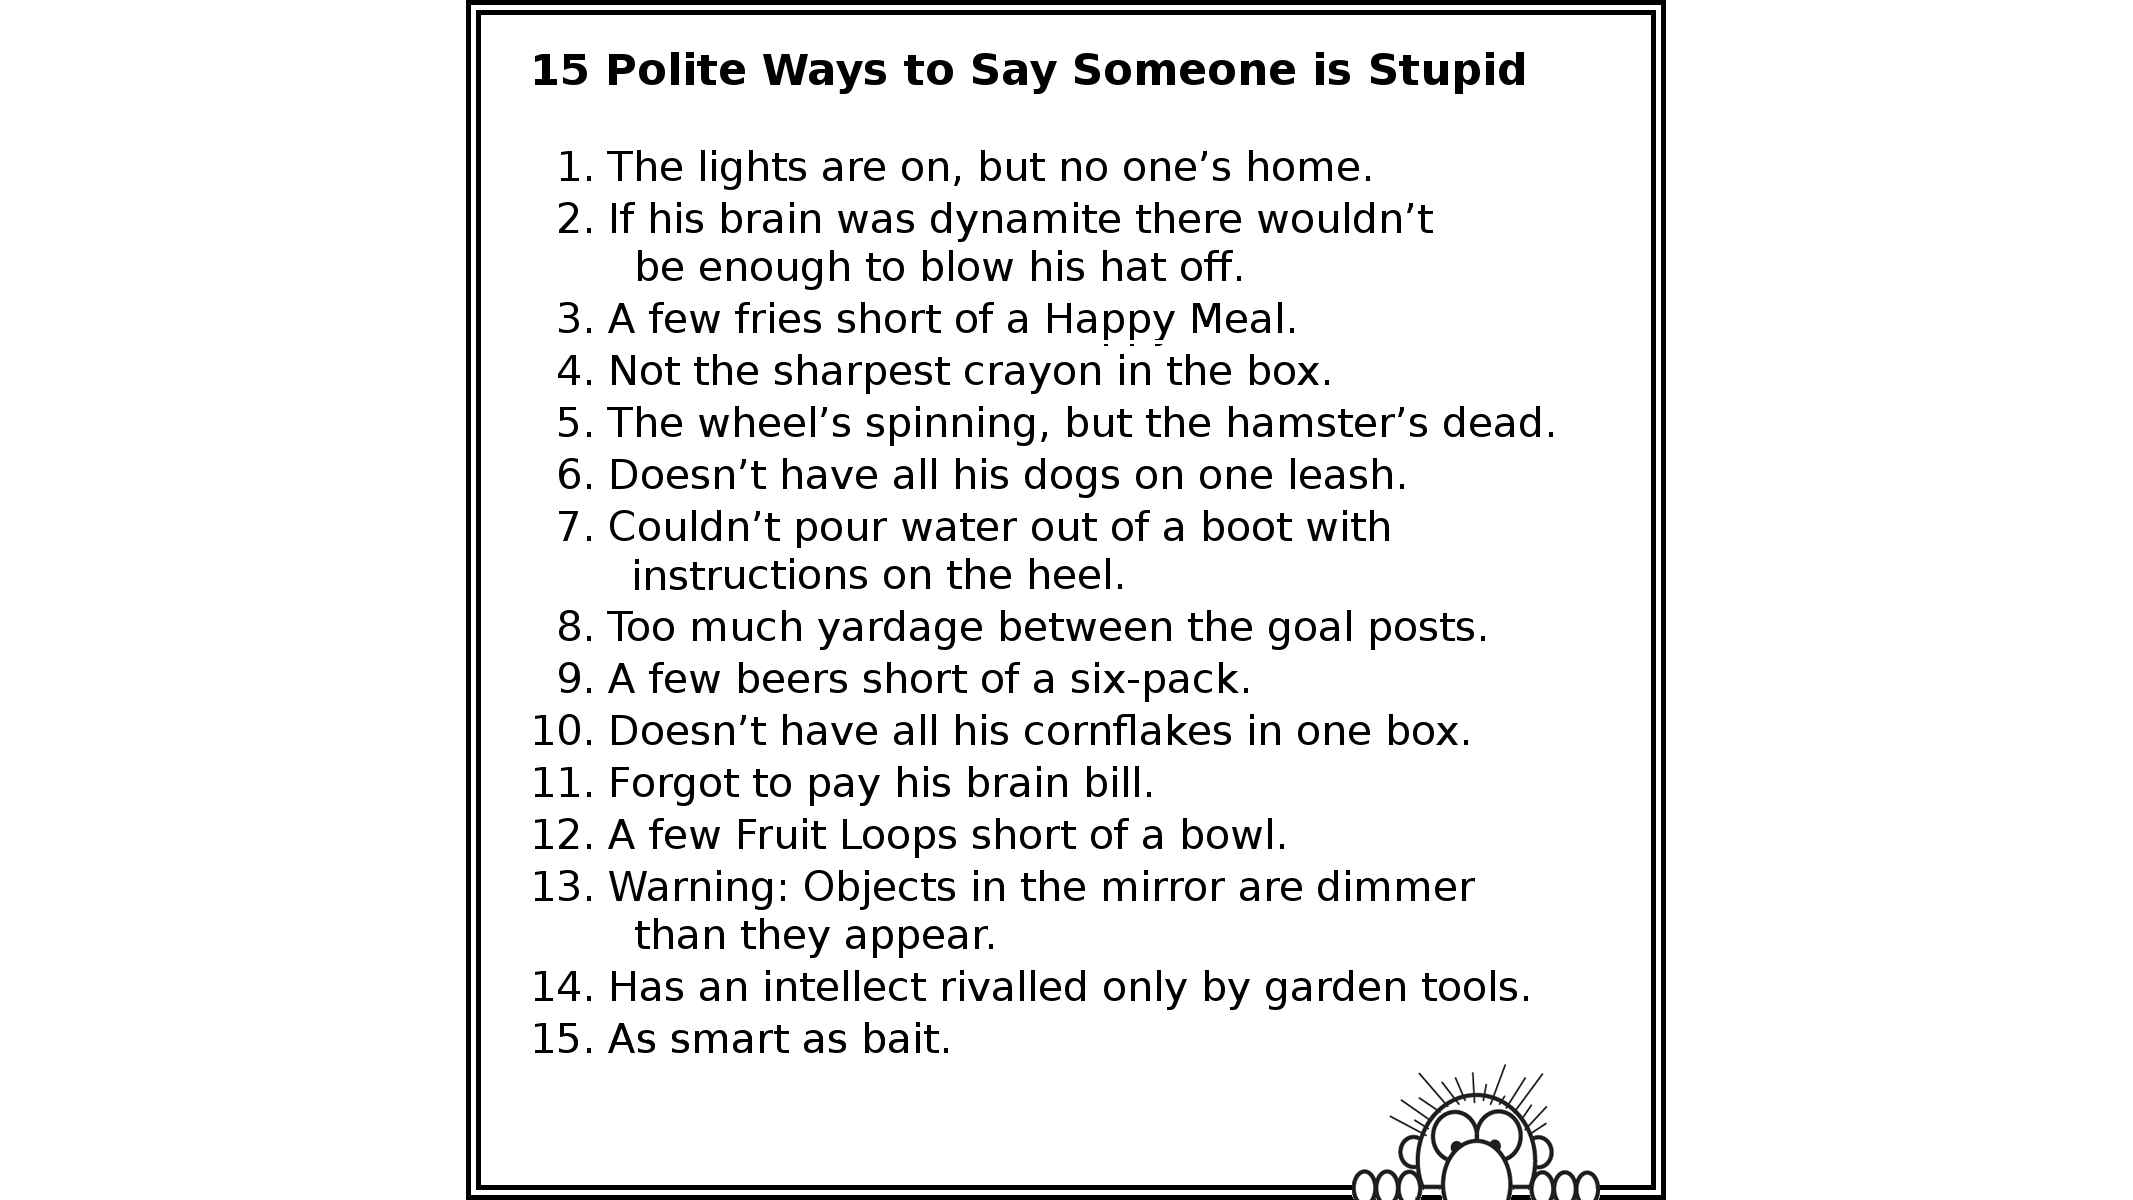 ways to call someone stupid